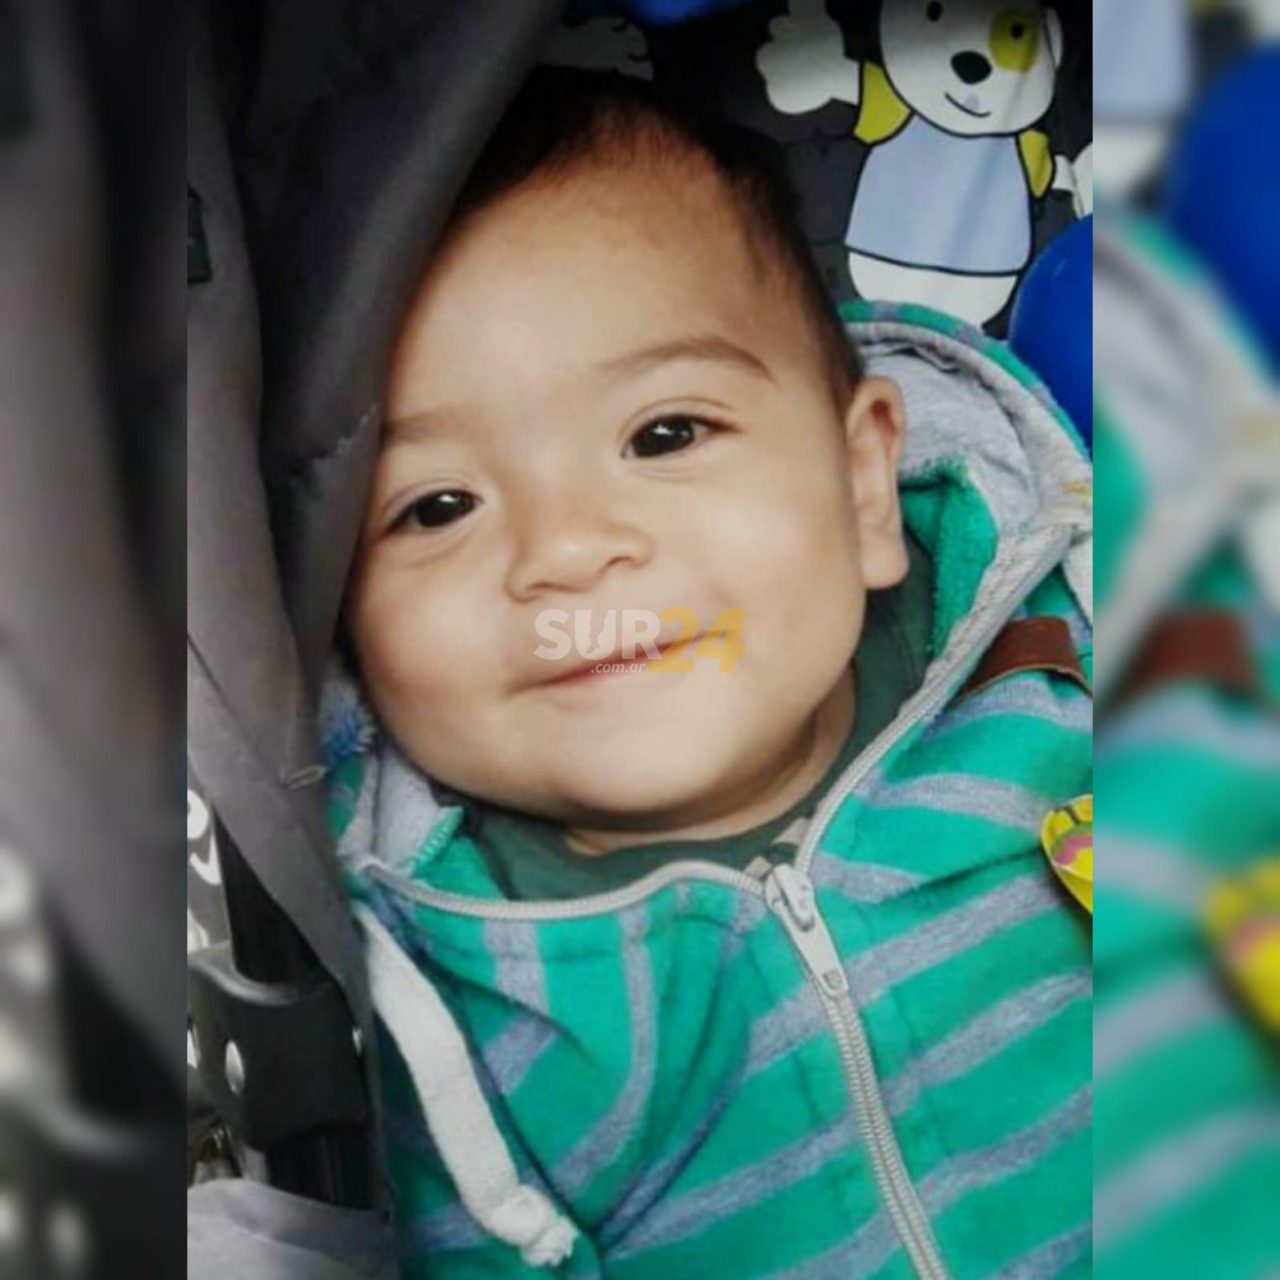 Félix, el nene de Firmat con leucemia linfoblástica, necesita un trasplante de médula